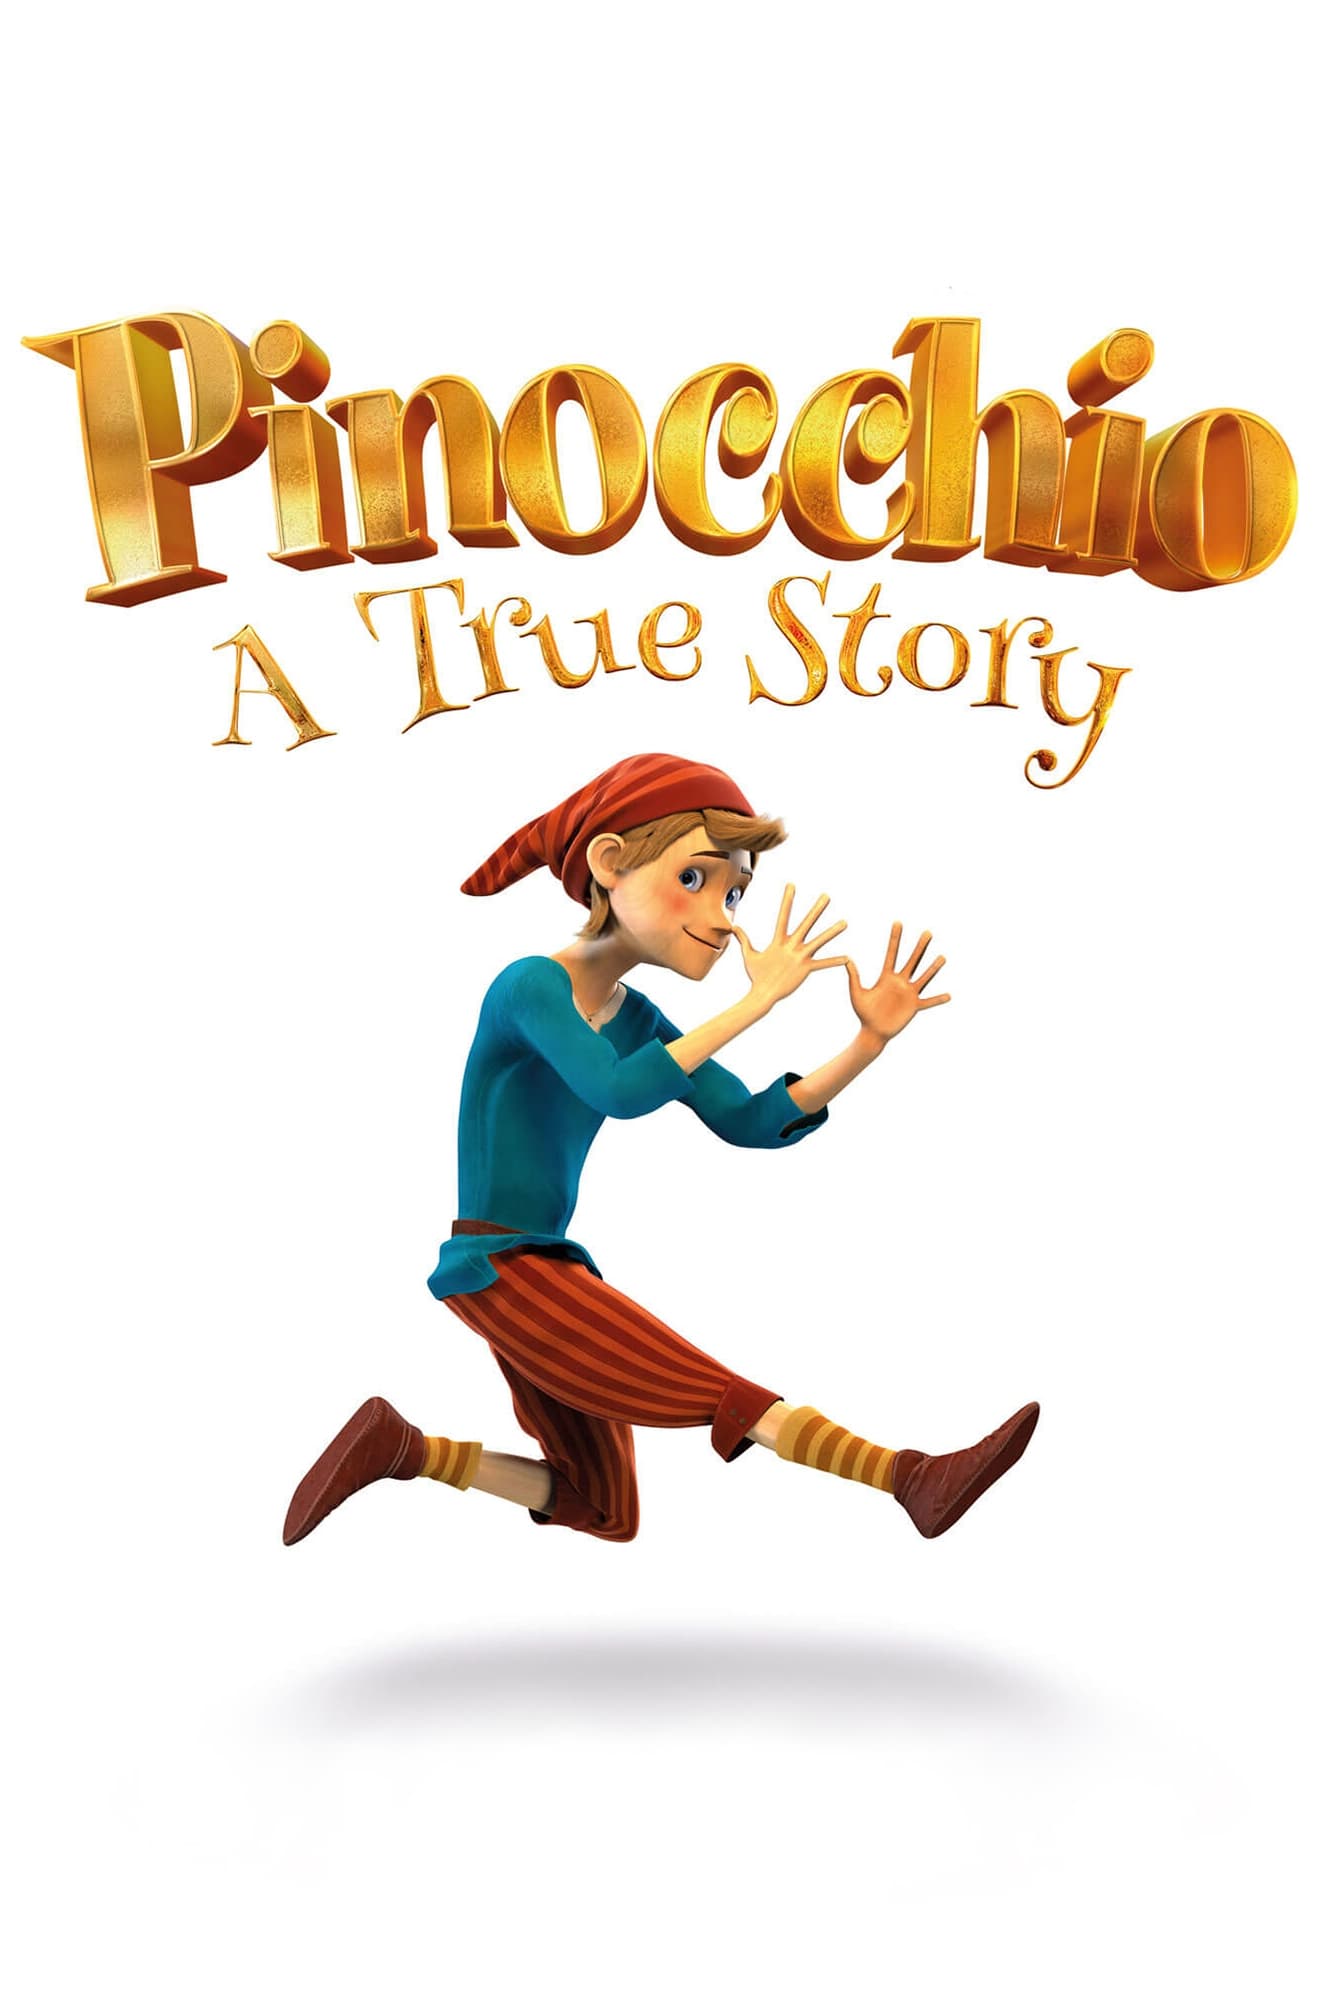 who wrote pinocchio story